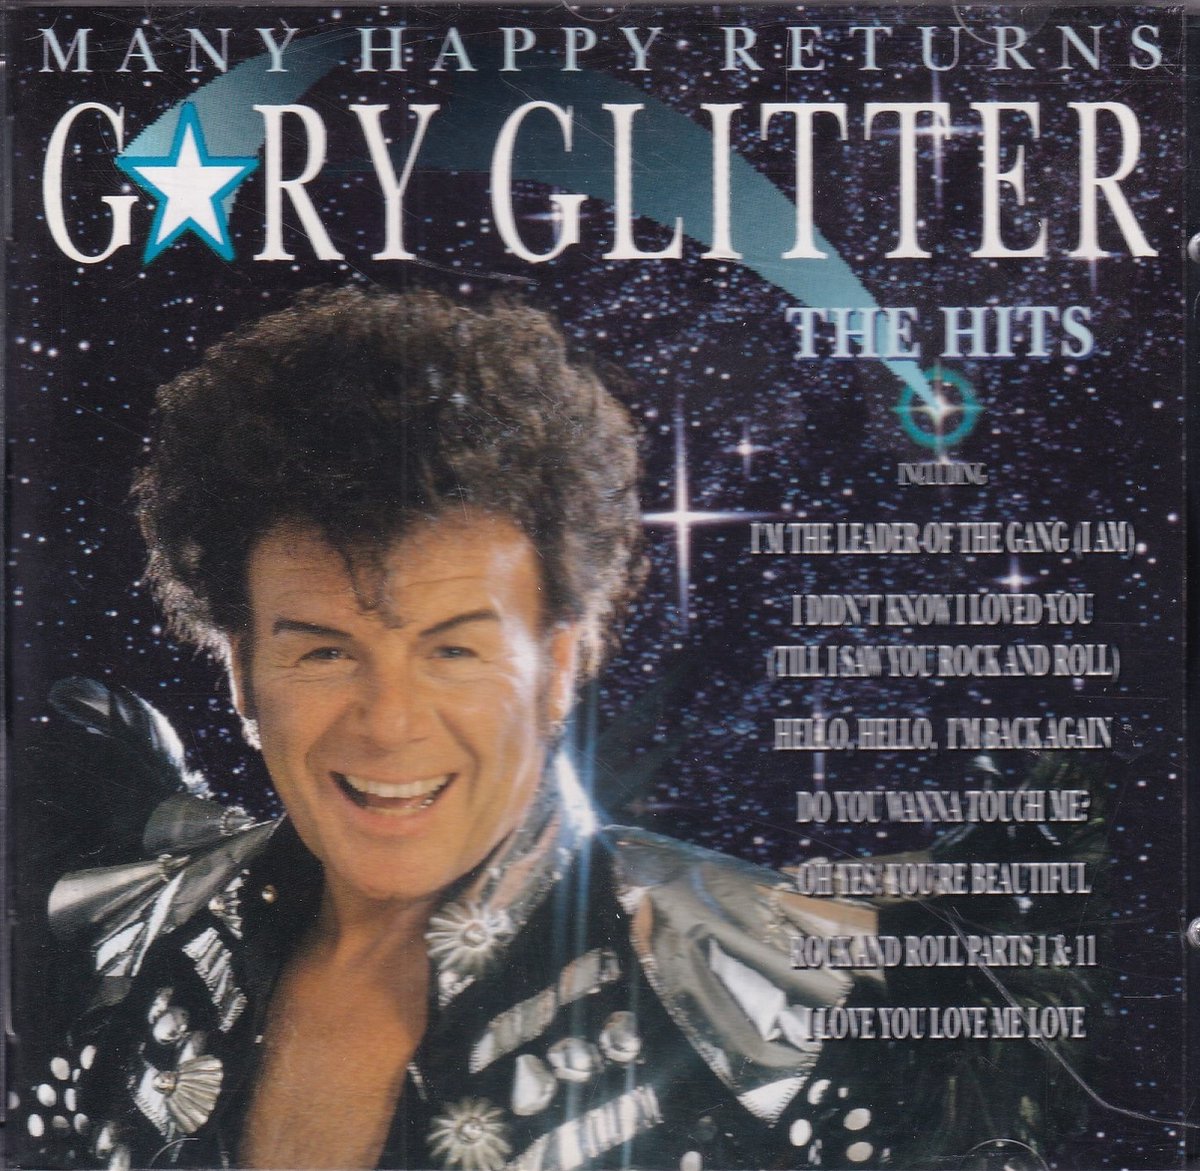 Many Happy Returns - The Hits - Gary Glitter